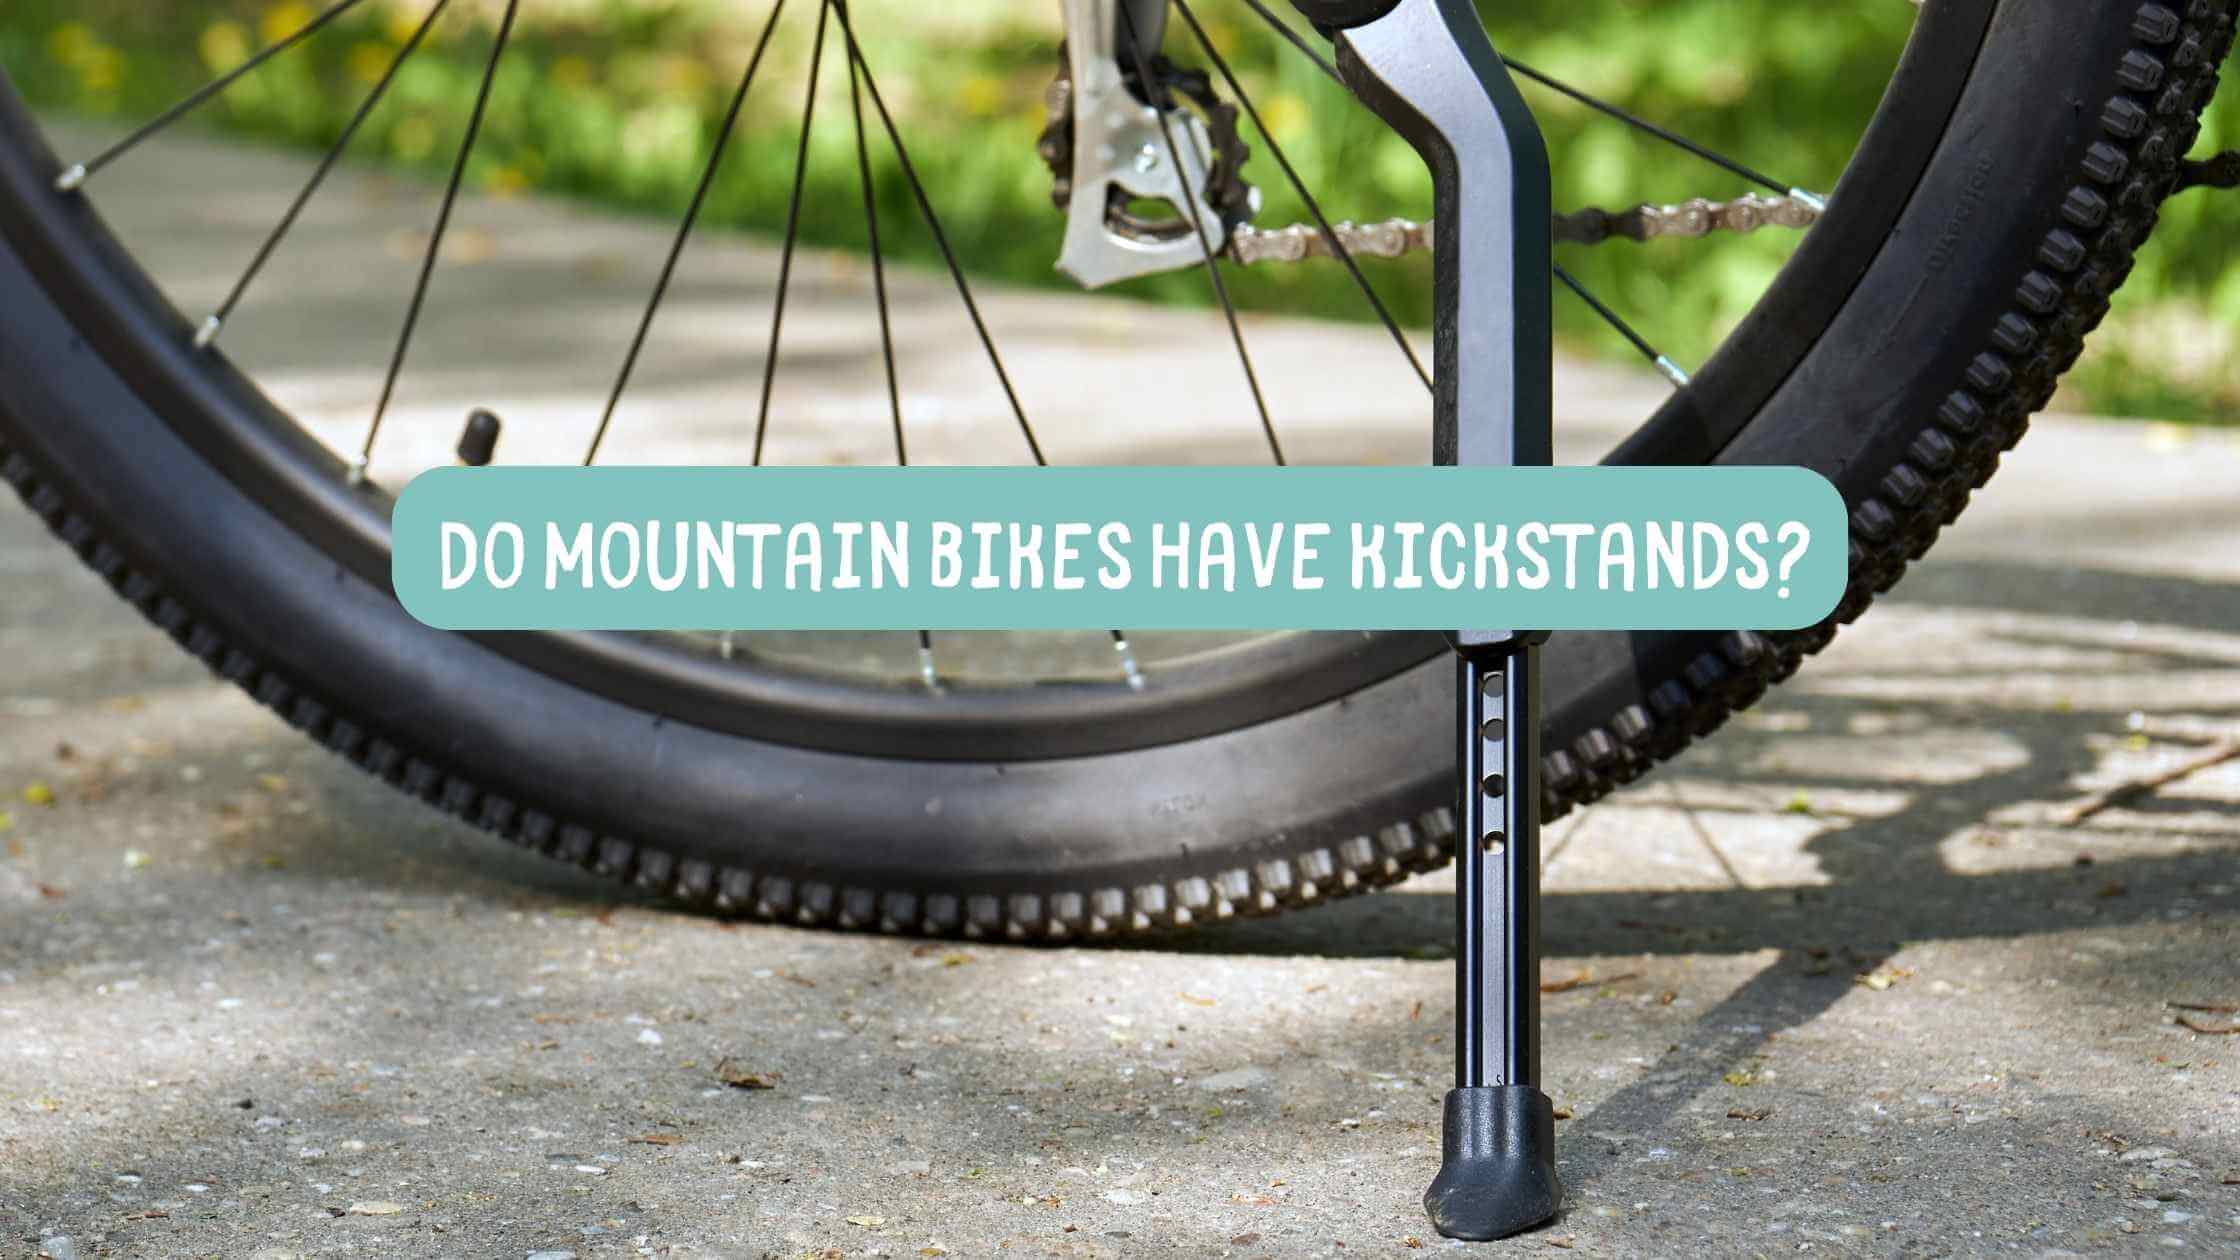 Do Mountain Bikes Have Kickstands